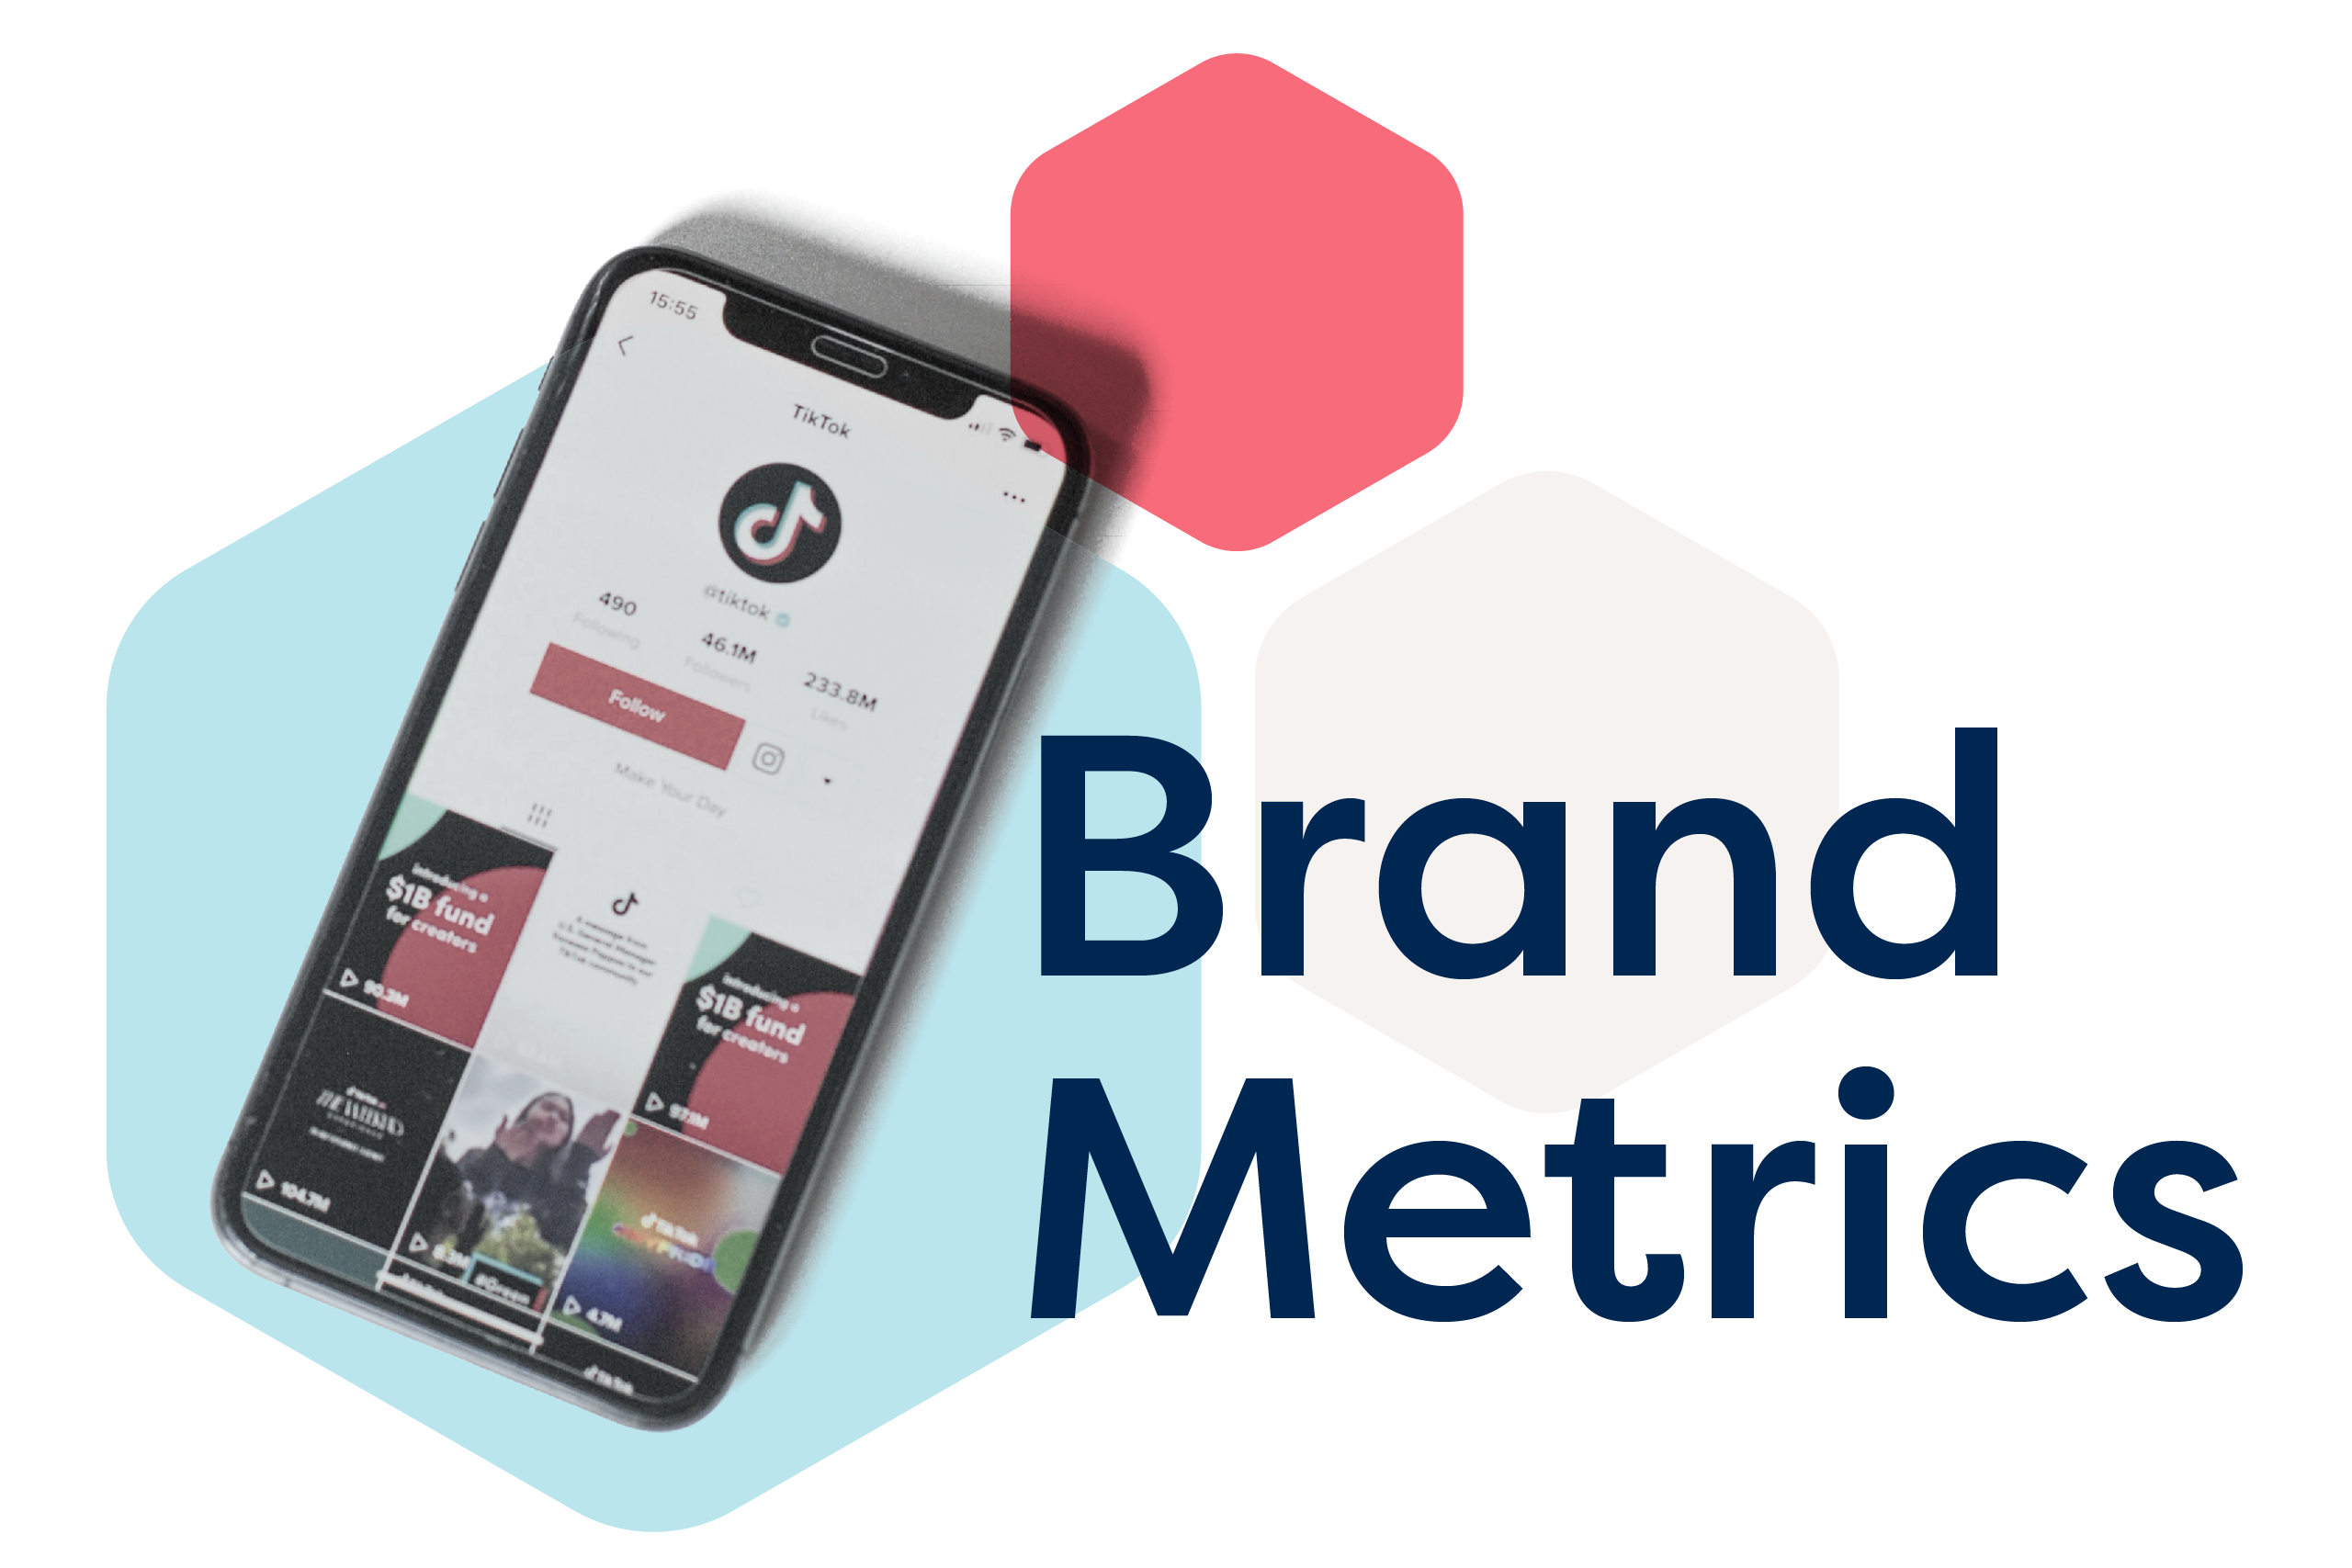 brand metrics